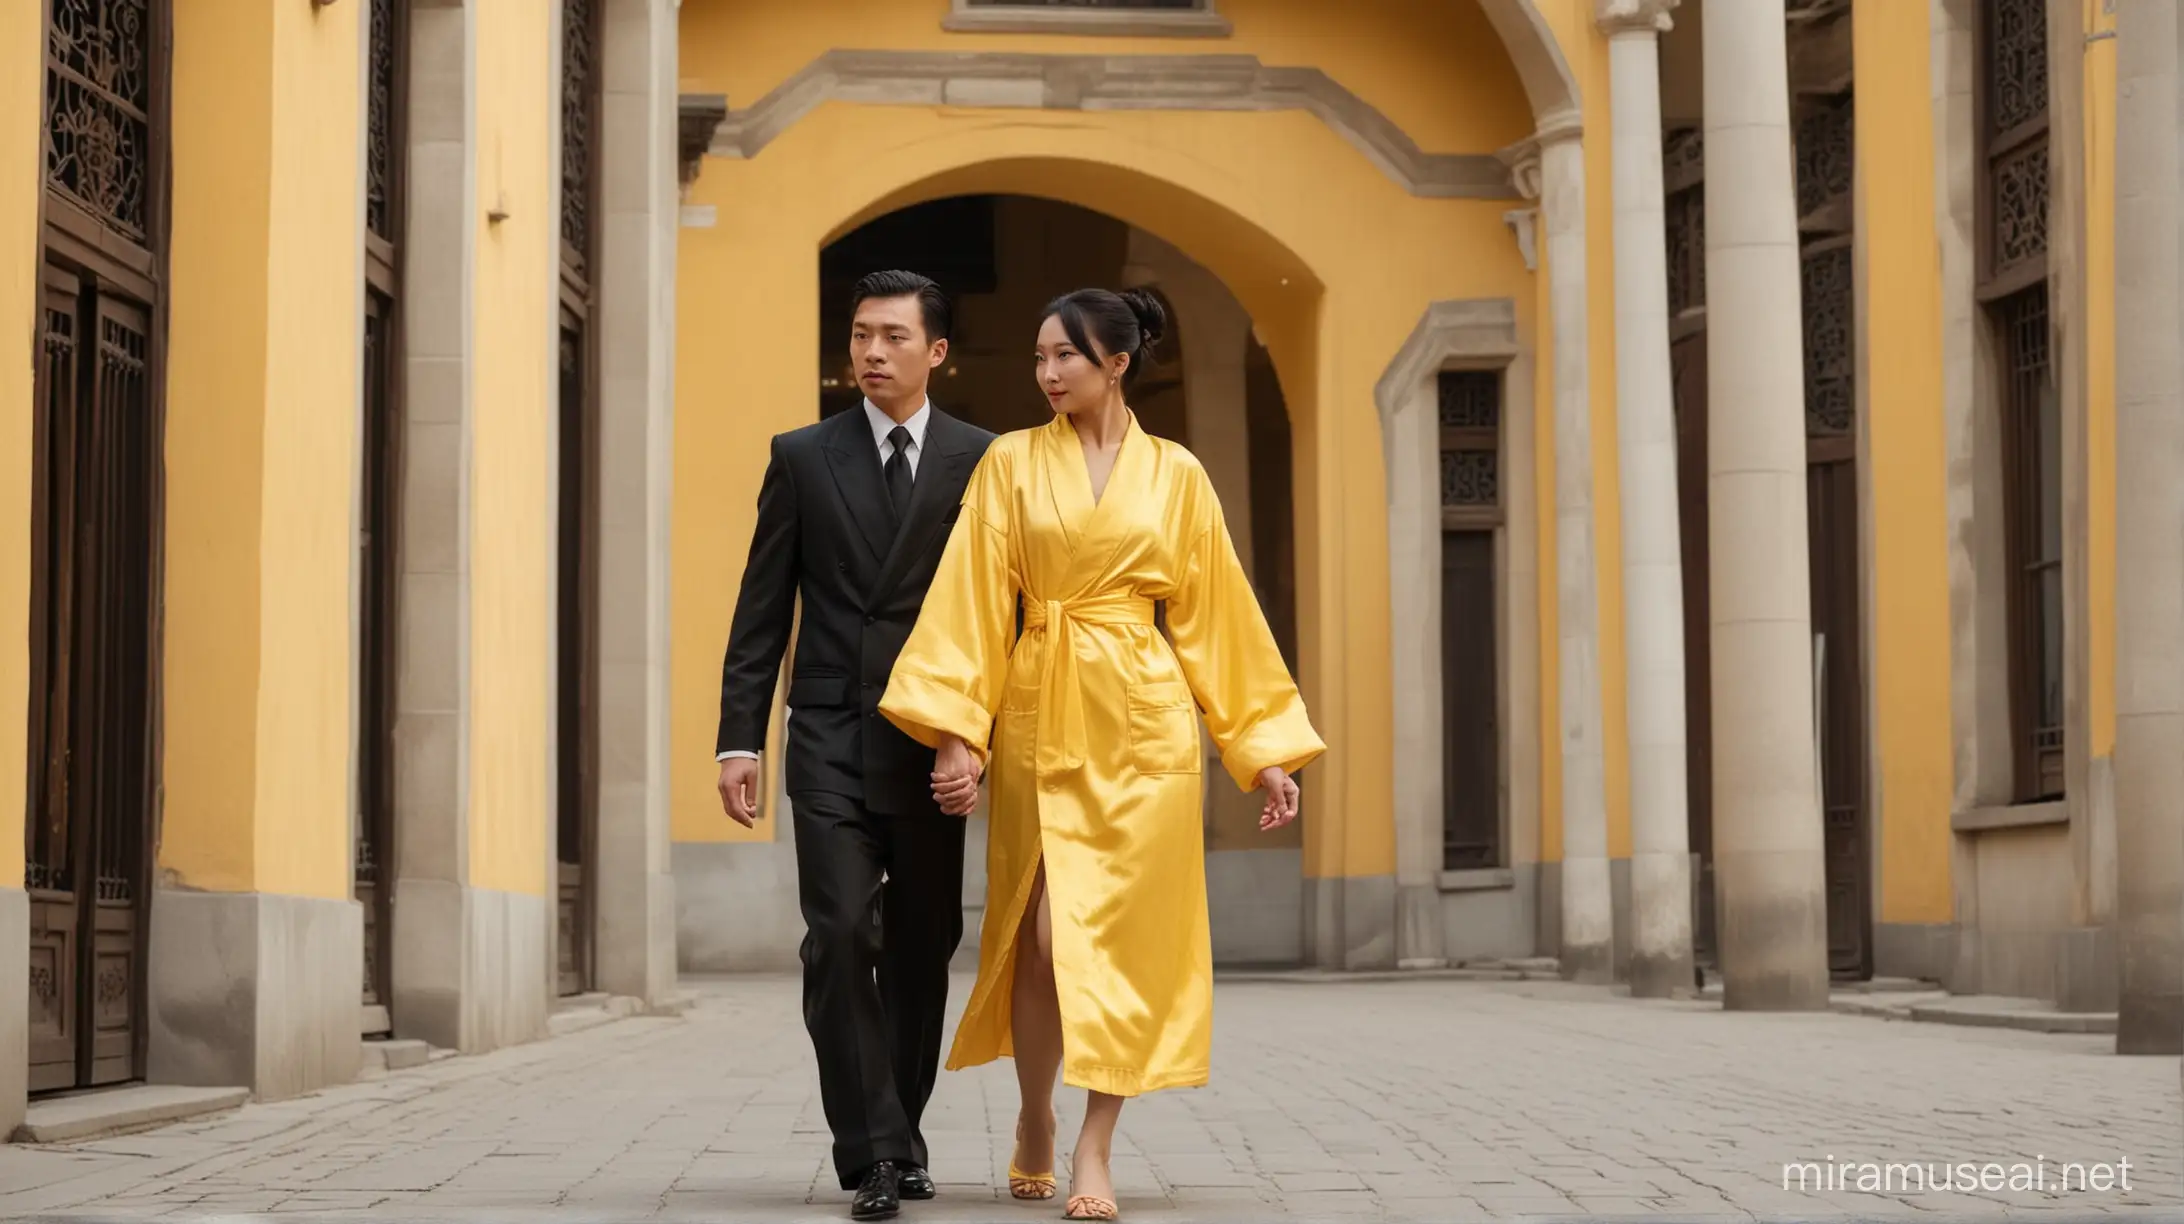 Mafia man in mafia suit is going to opera with chinese woman wearing yellow bathrobe